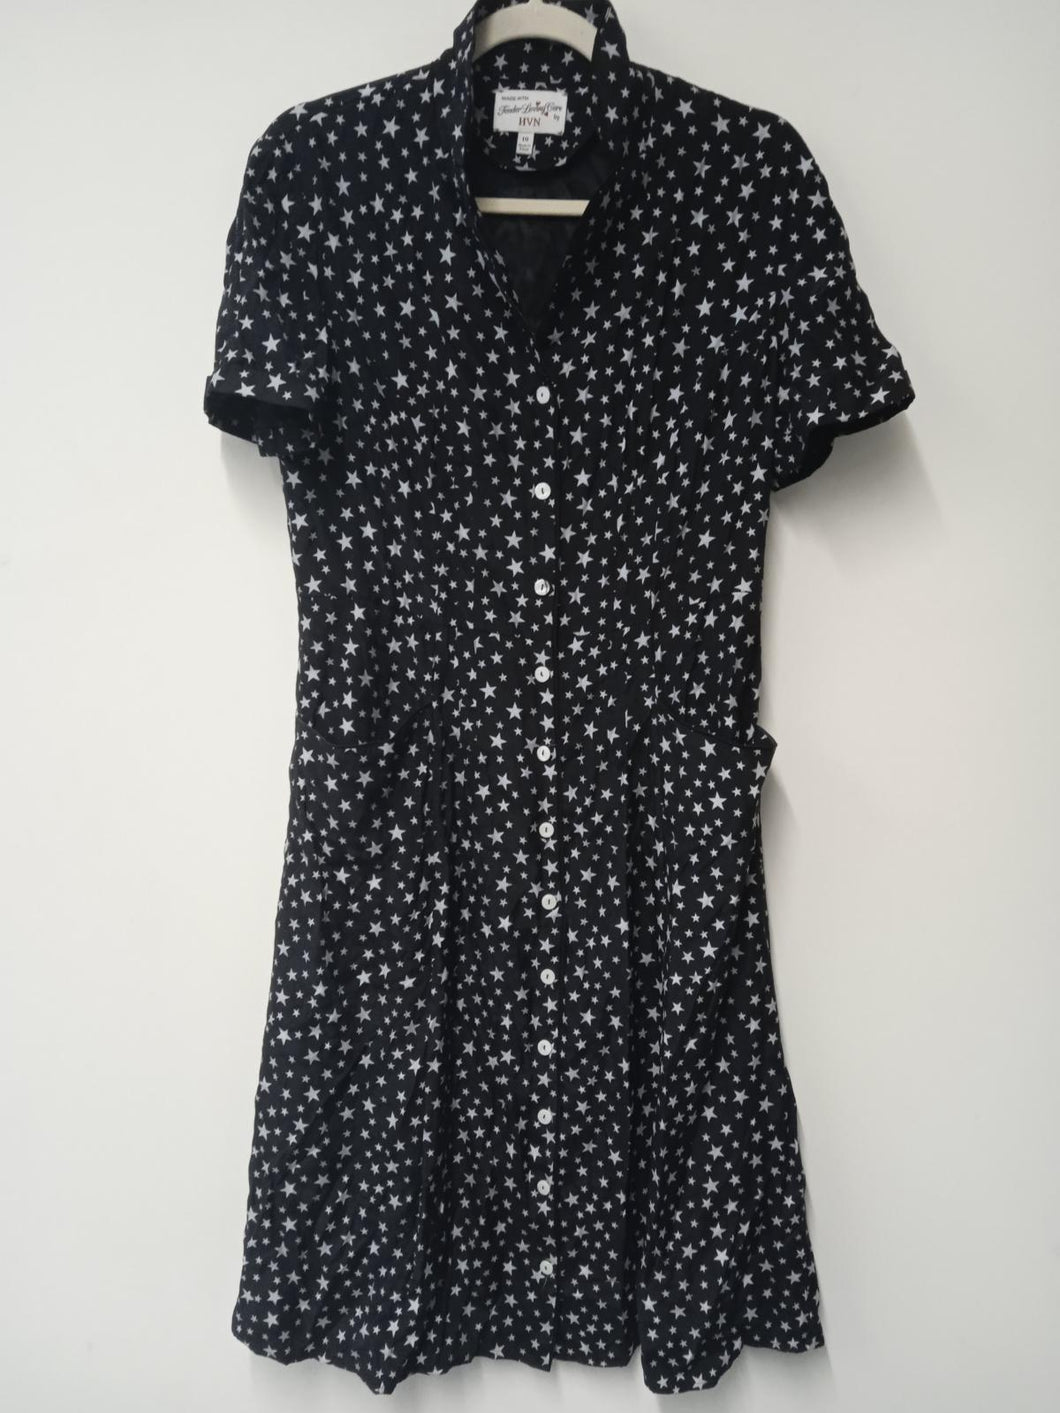 HVN Ladies Black Silk Star Print Short Sleeve Collared Dress Size UK10